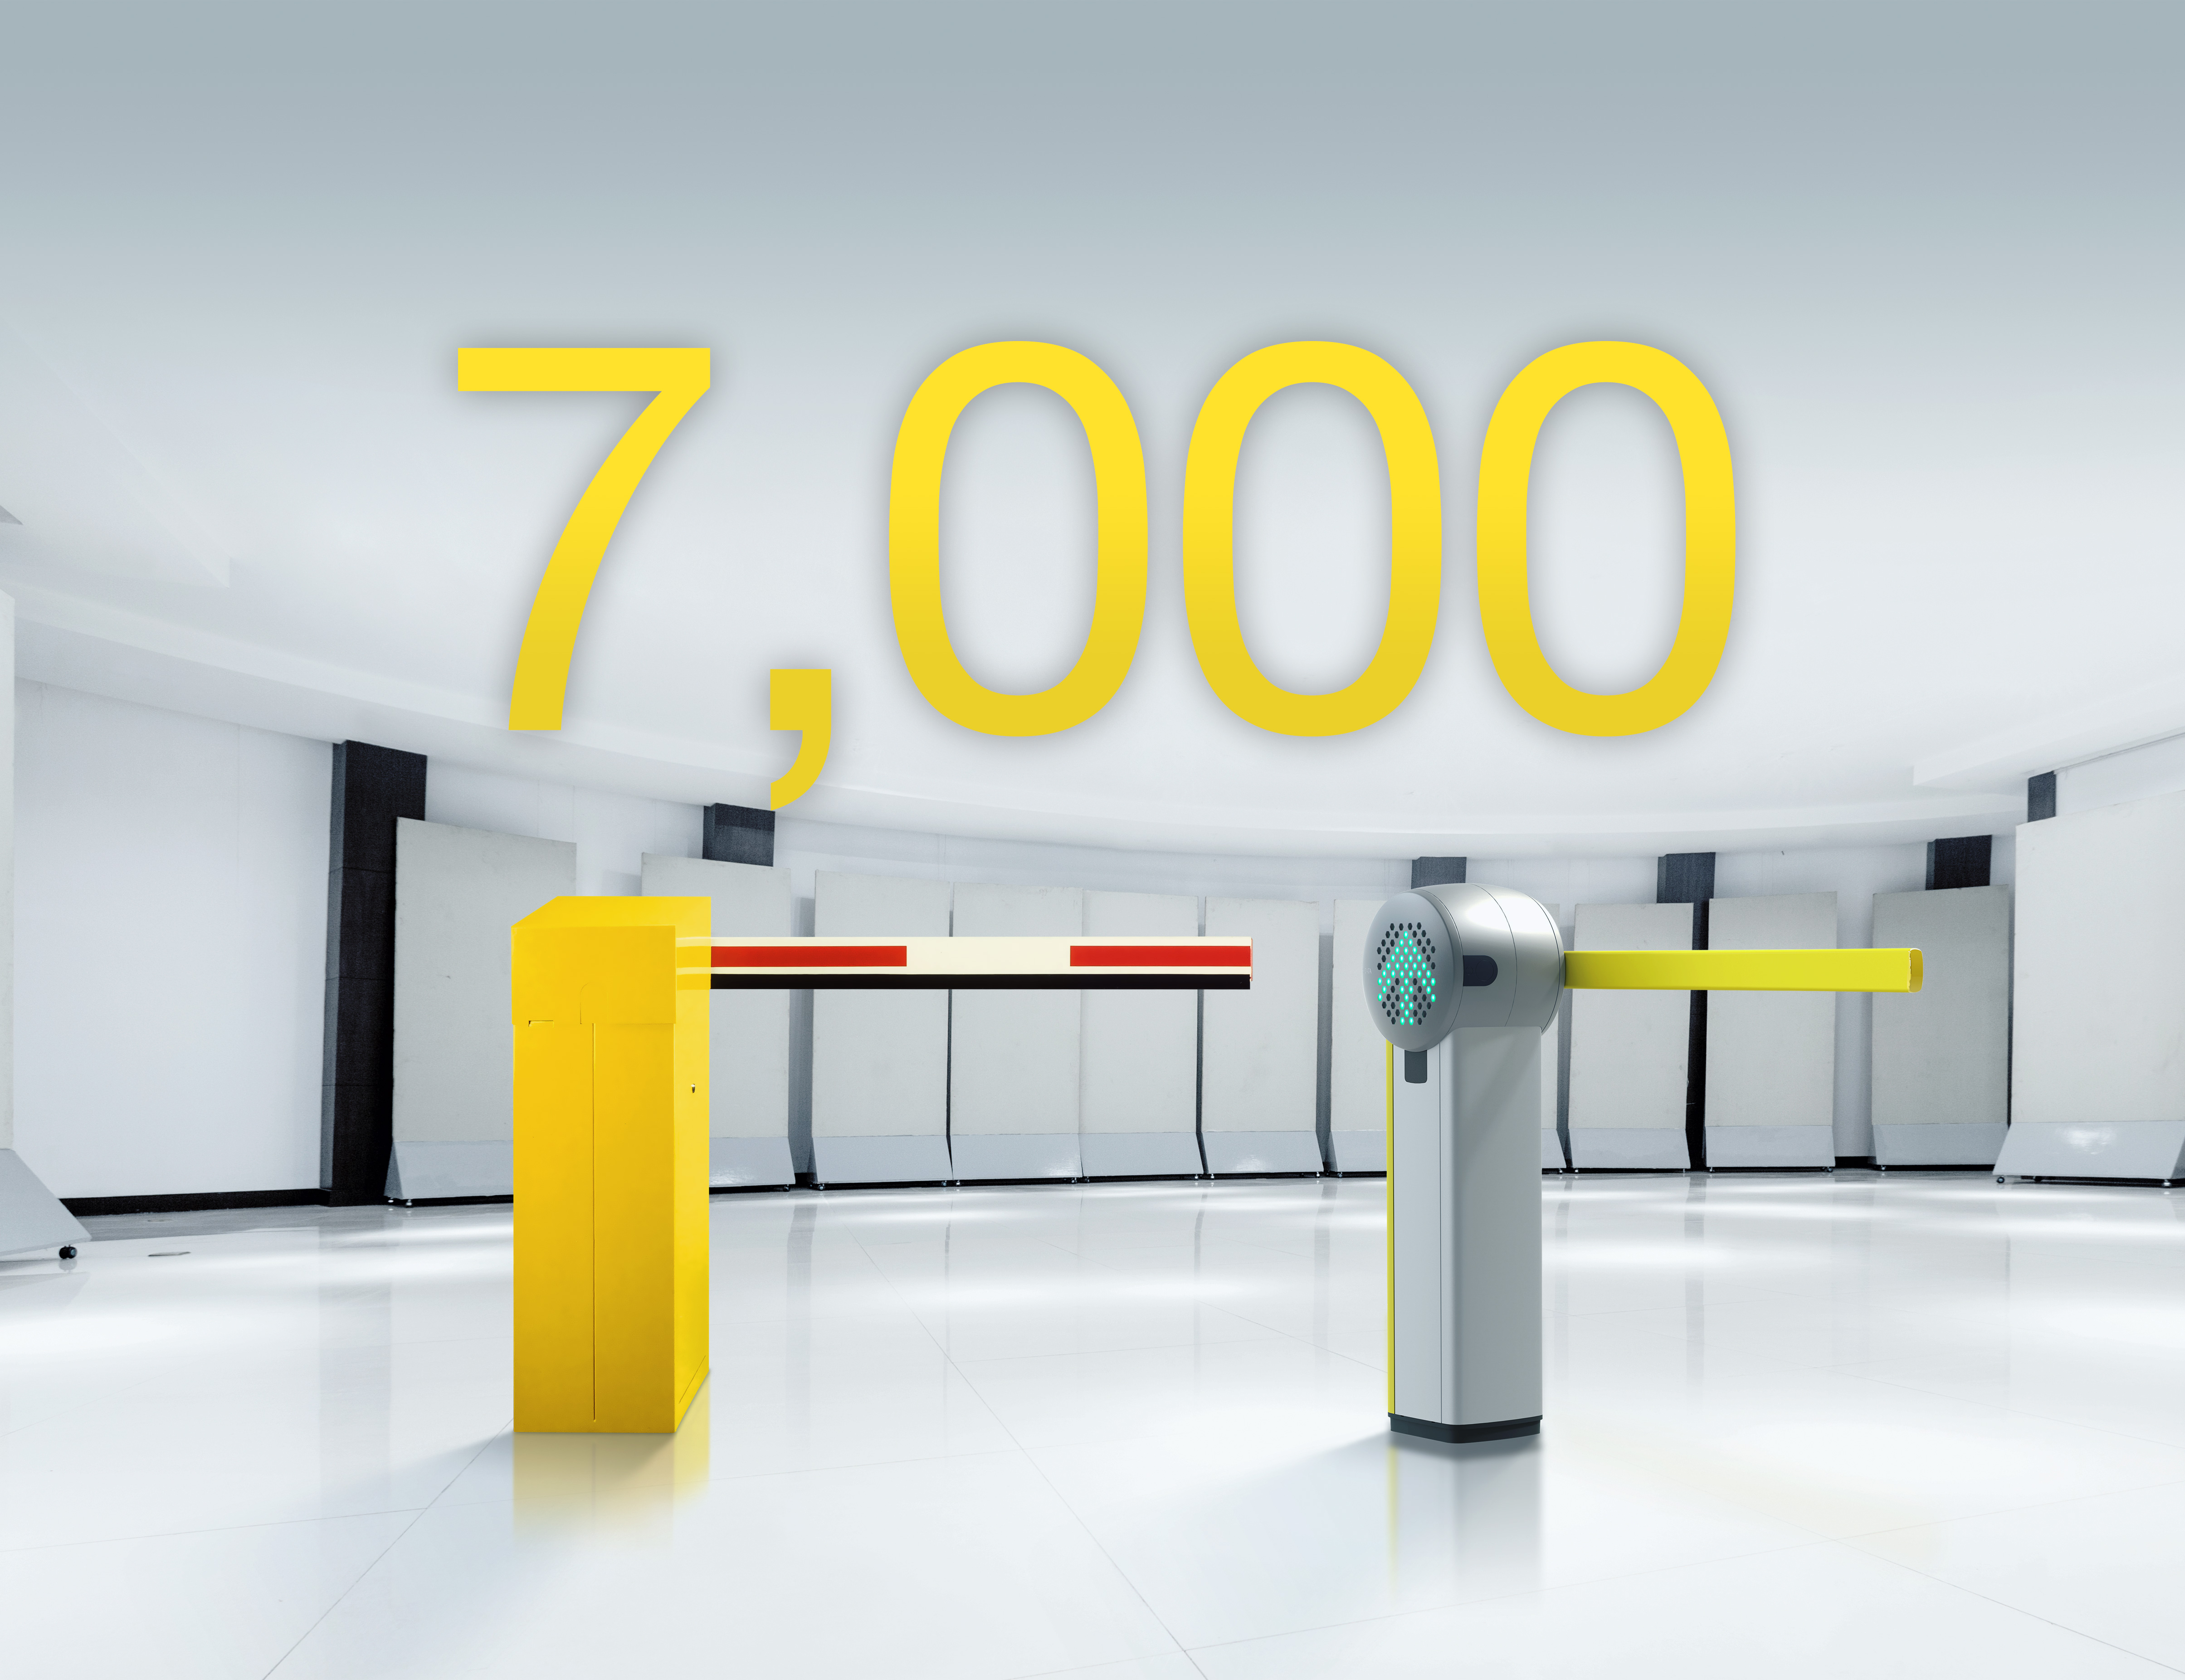 7,000th Skidata parking system installed